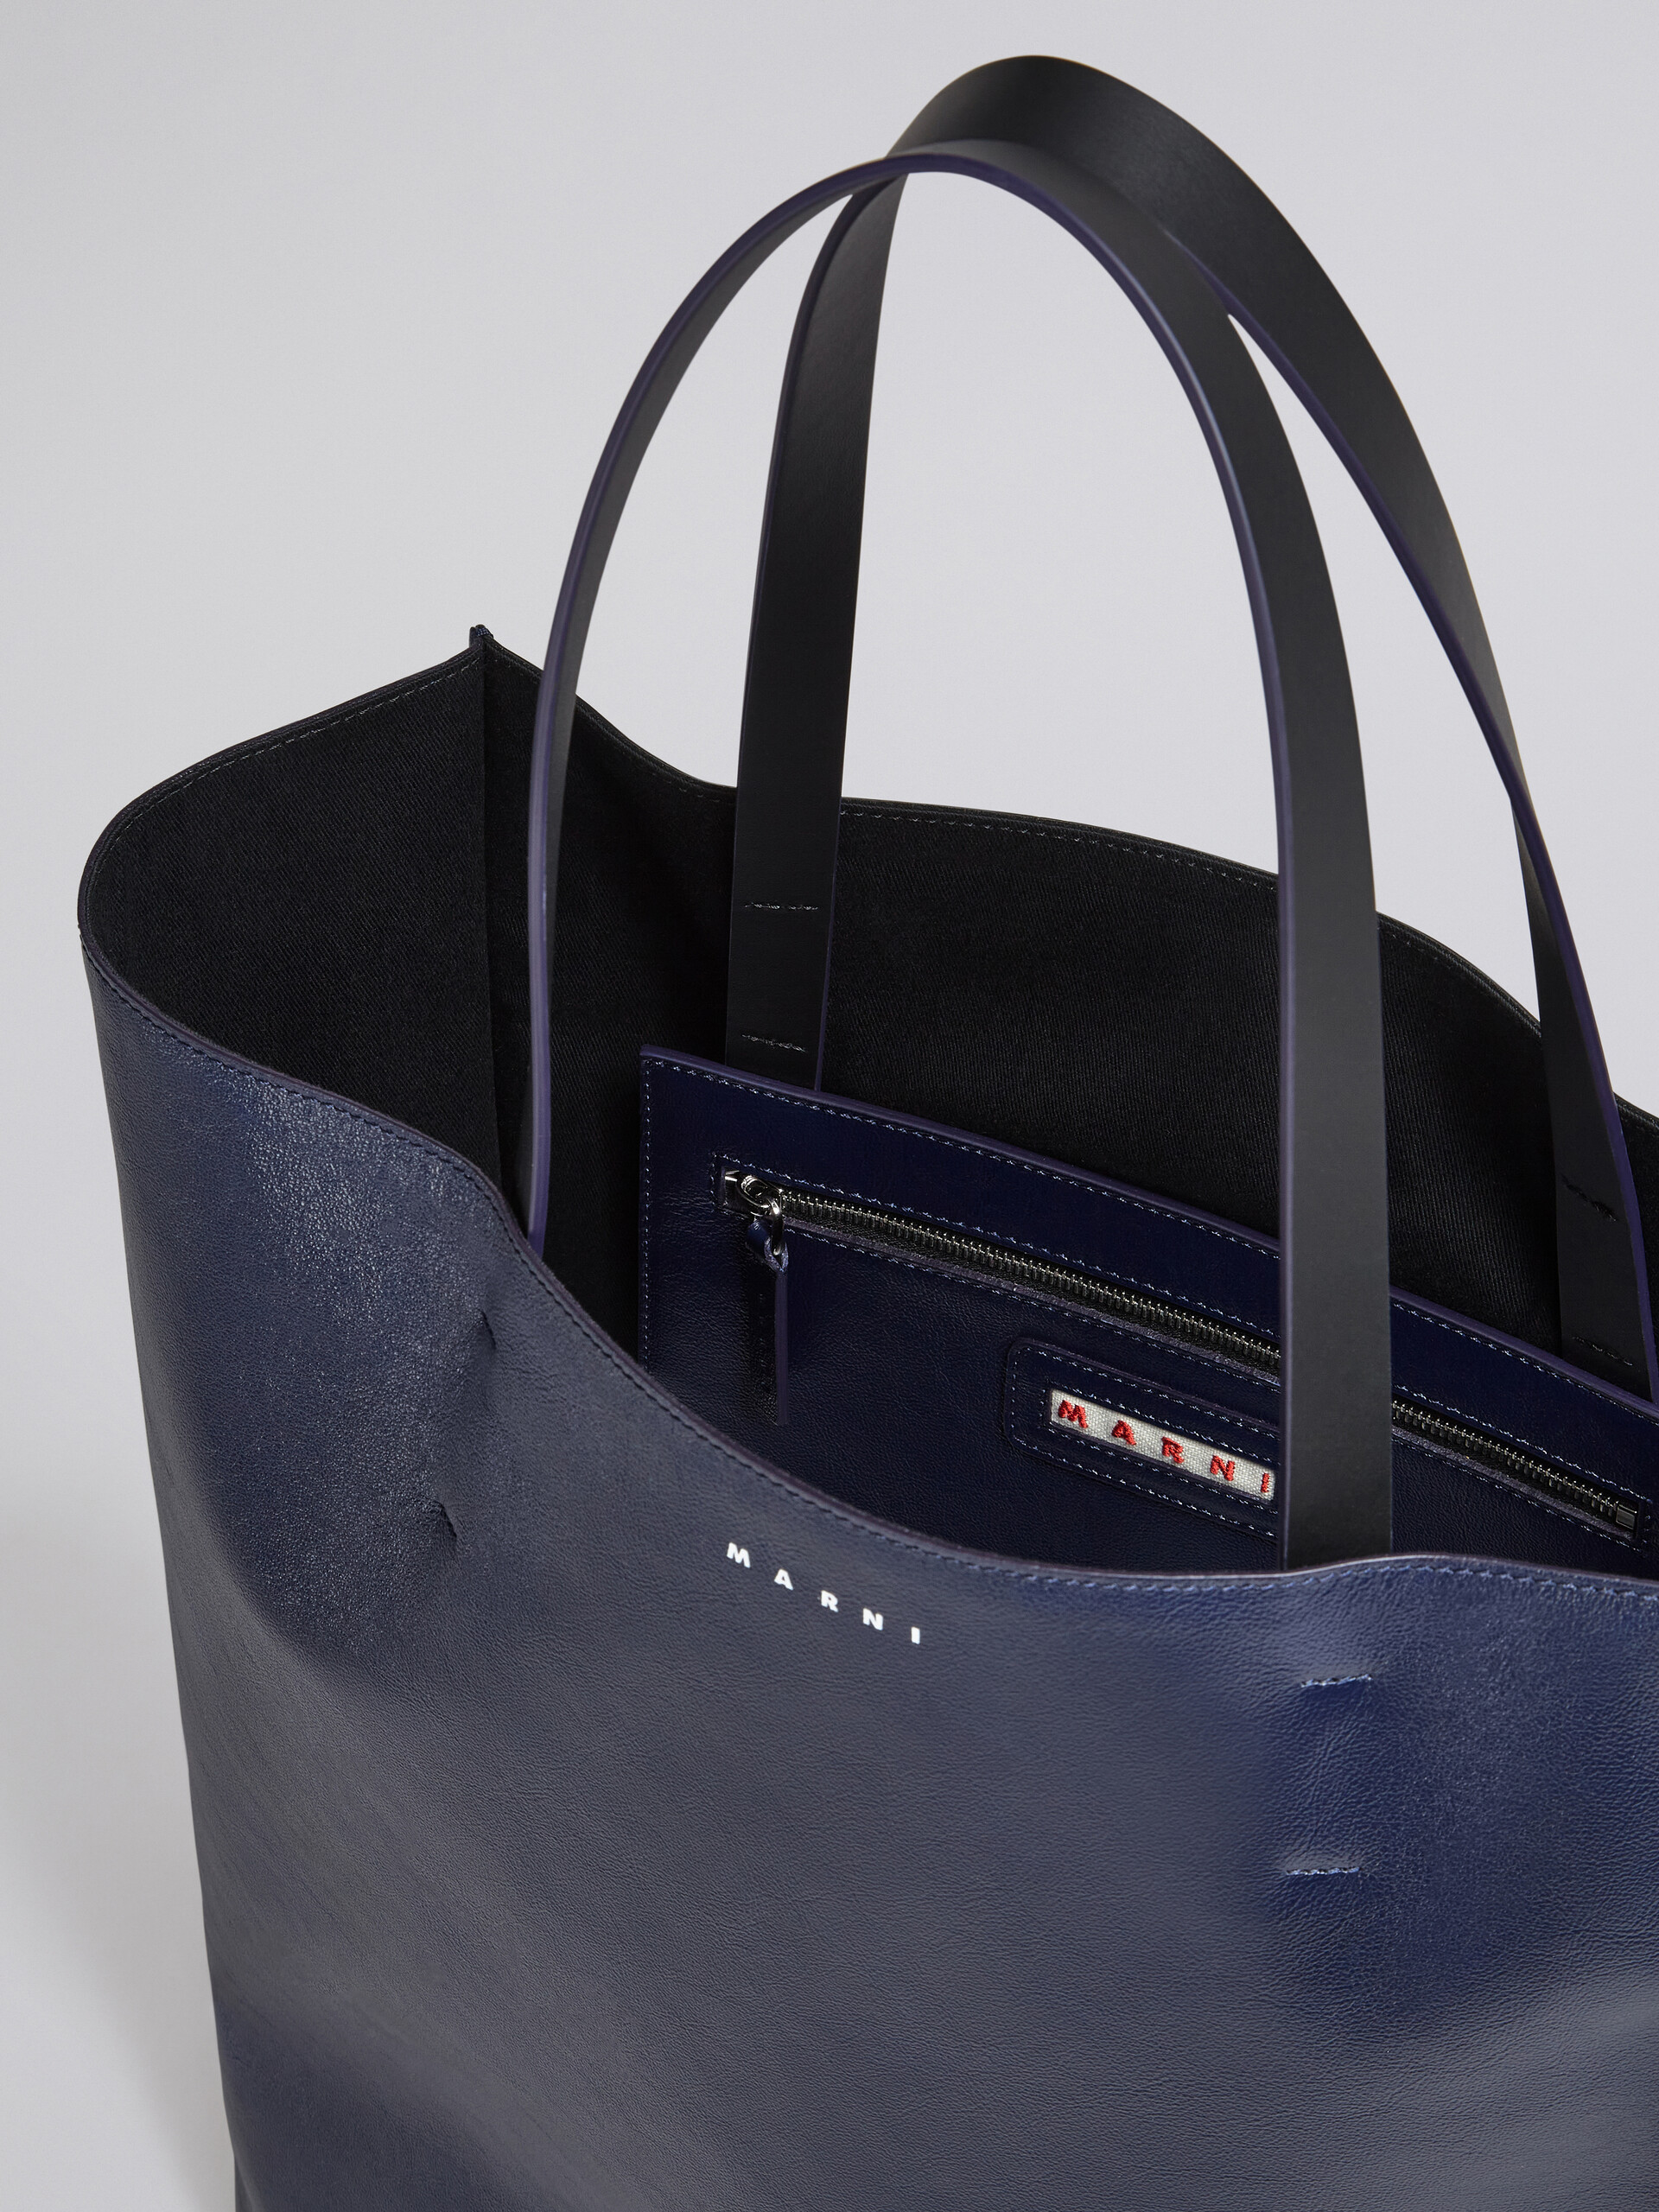 MUSEO SOFT bag grande in pelle lucida blu e nera - Borse shopping - Image 4